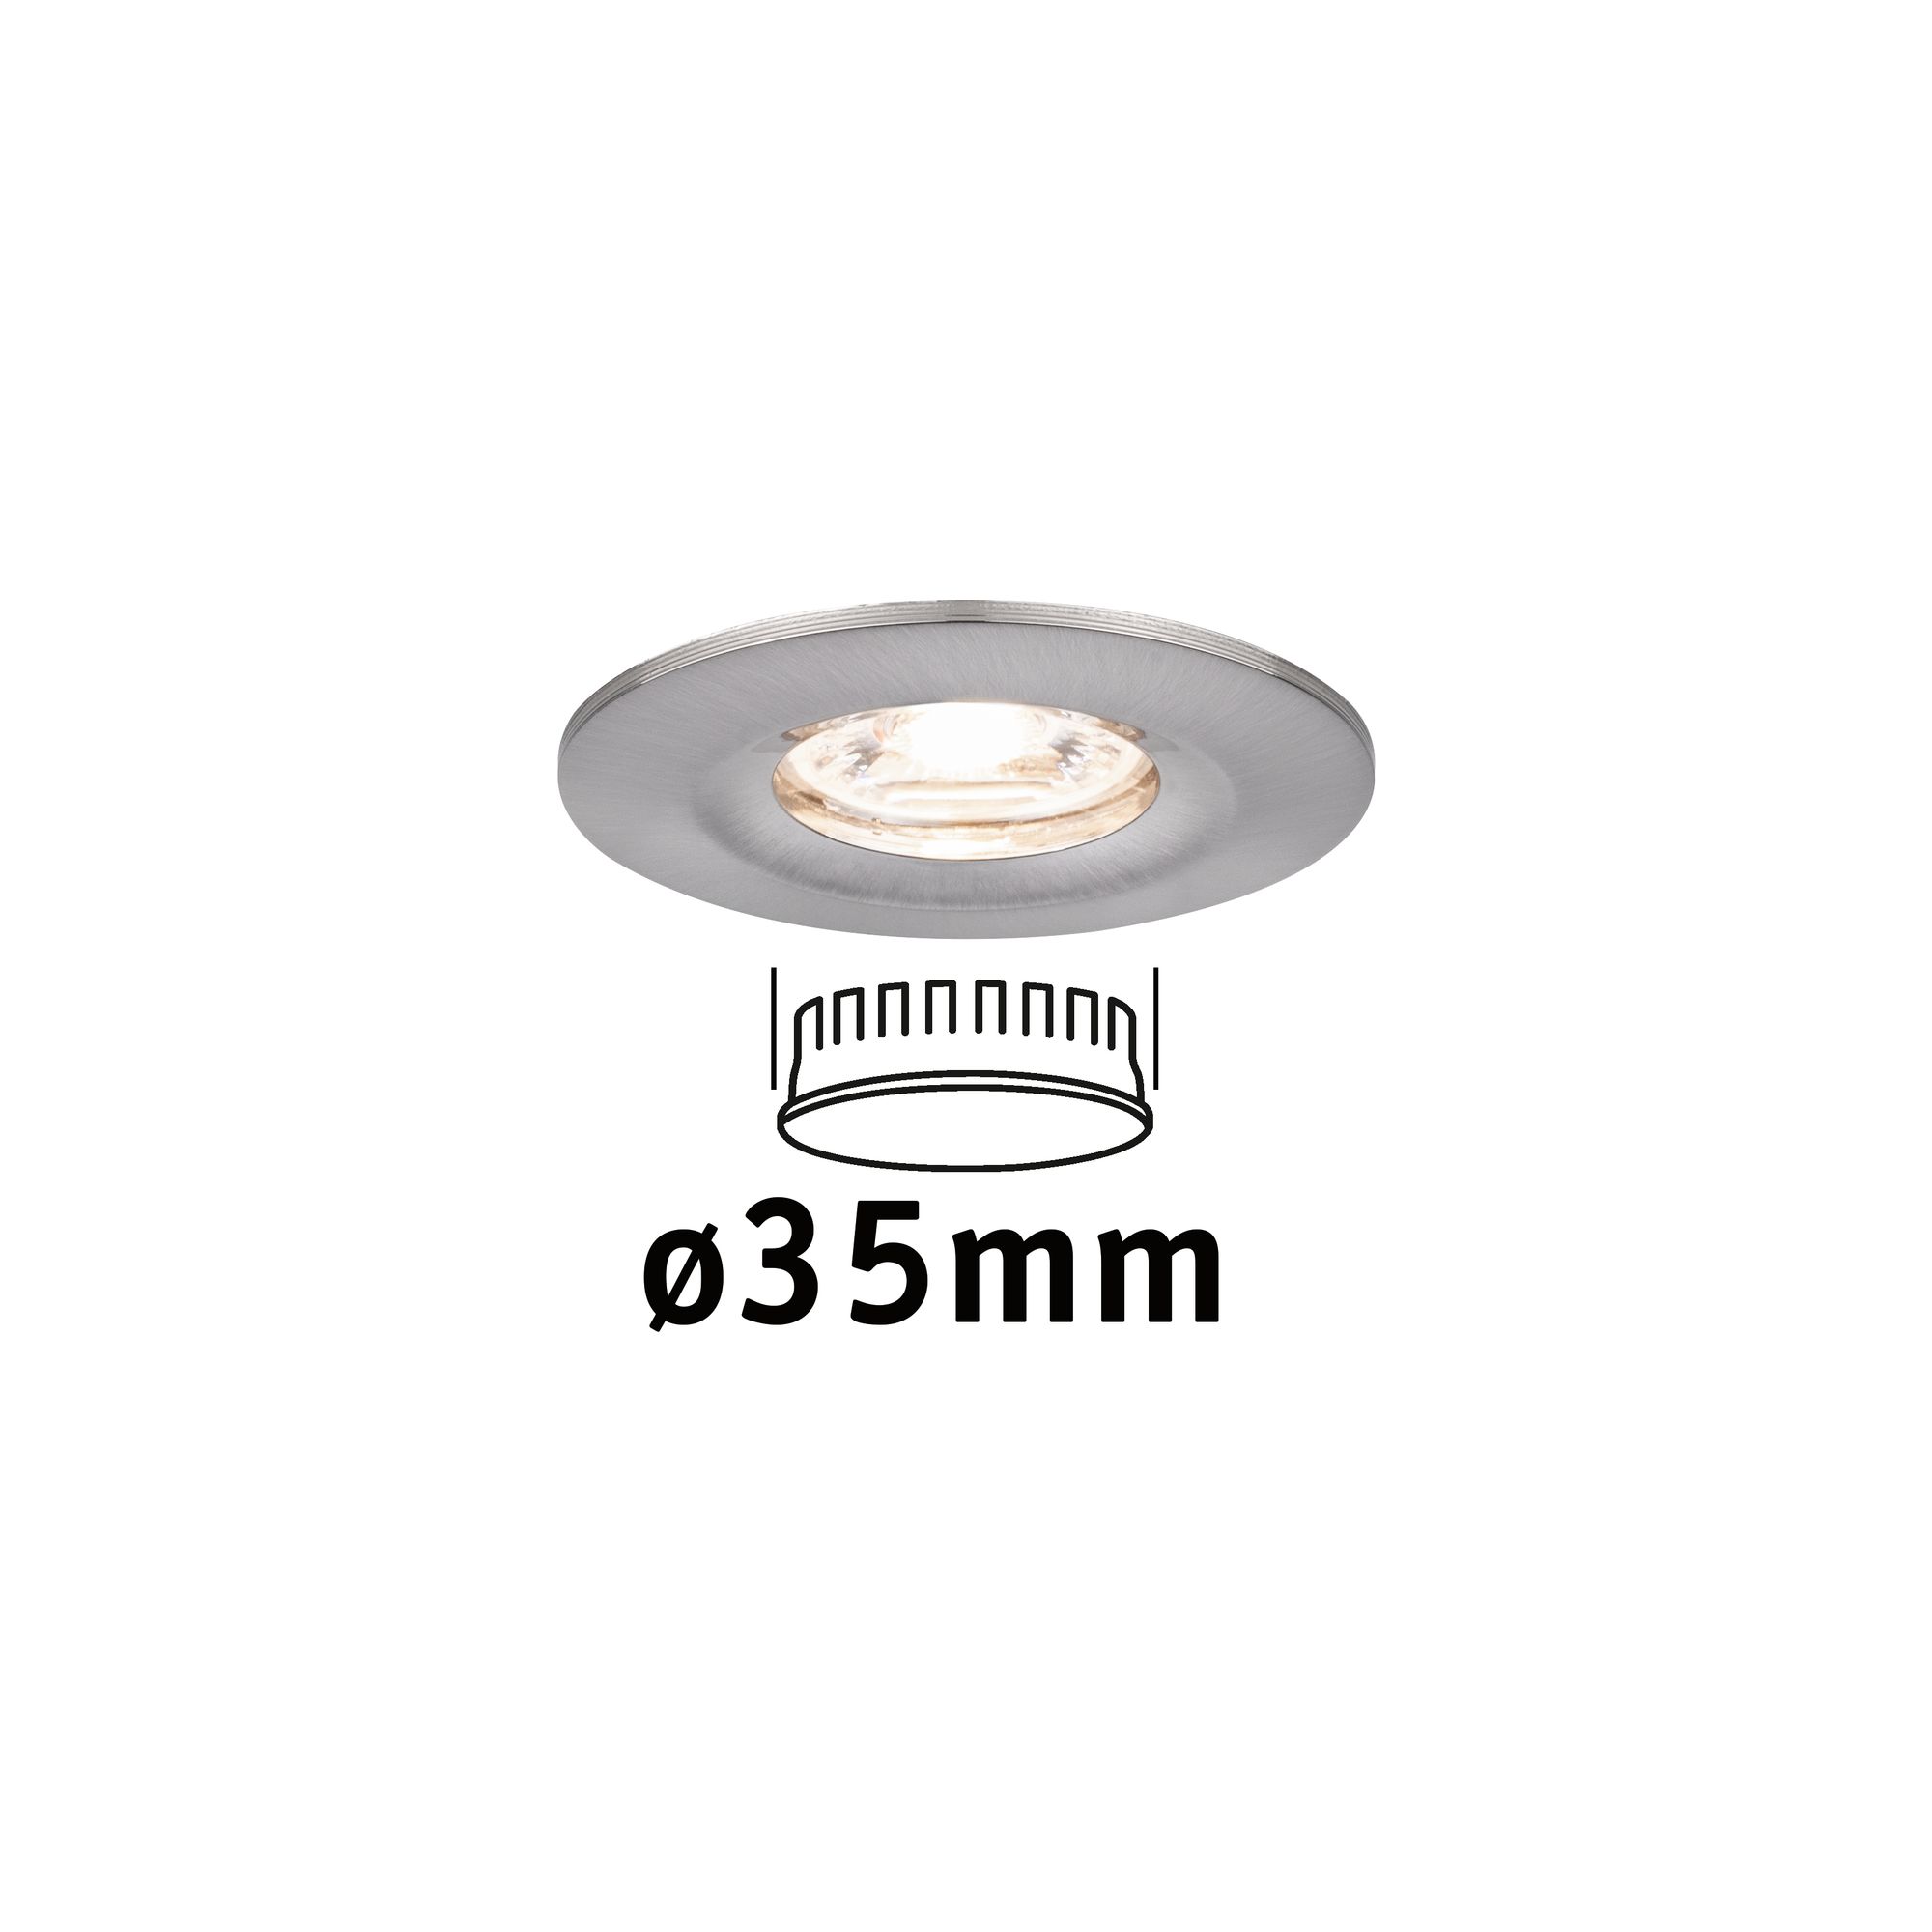 PAULMANN - LED vestavné svítidlo Nova mini nevýklopné IP44 1x4W 2.700K kov kartáčovaný, P 94300